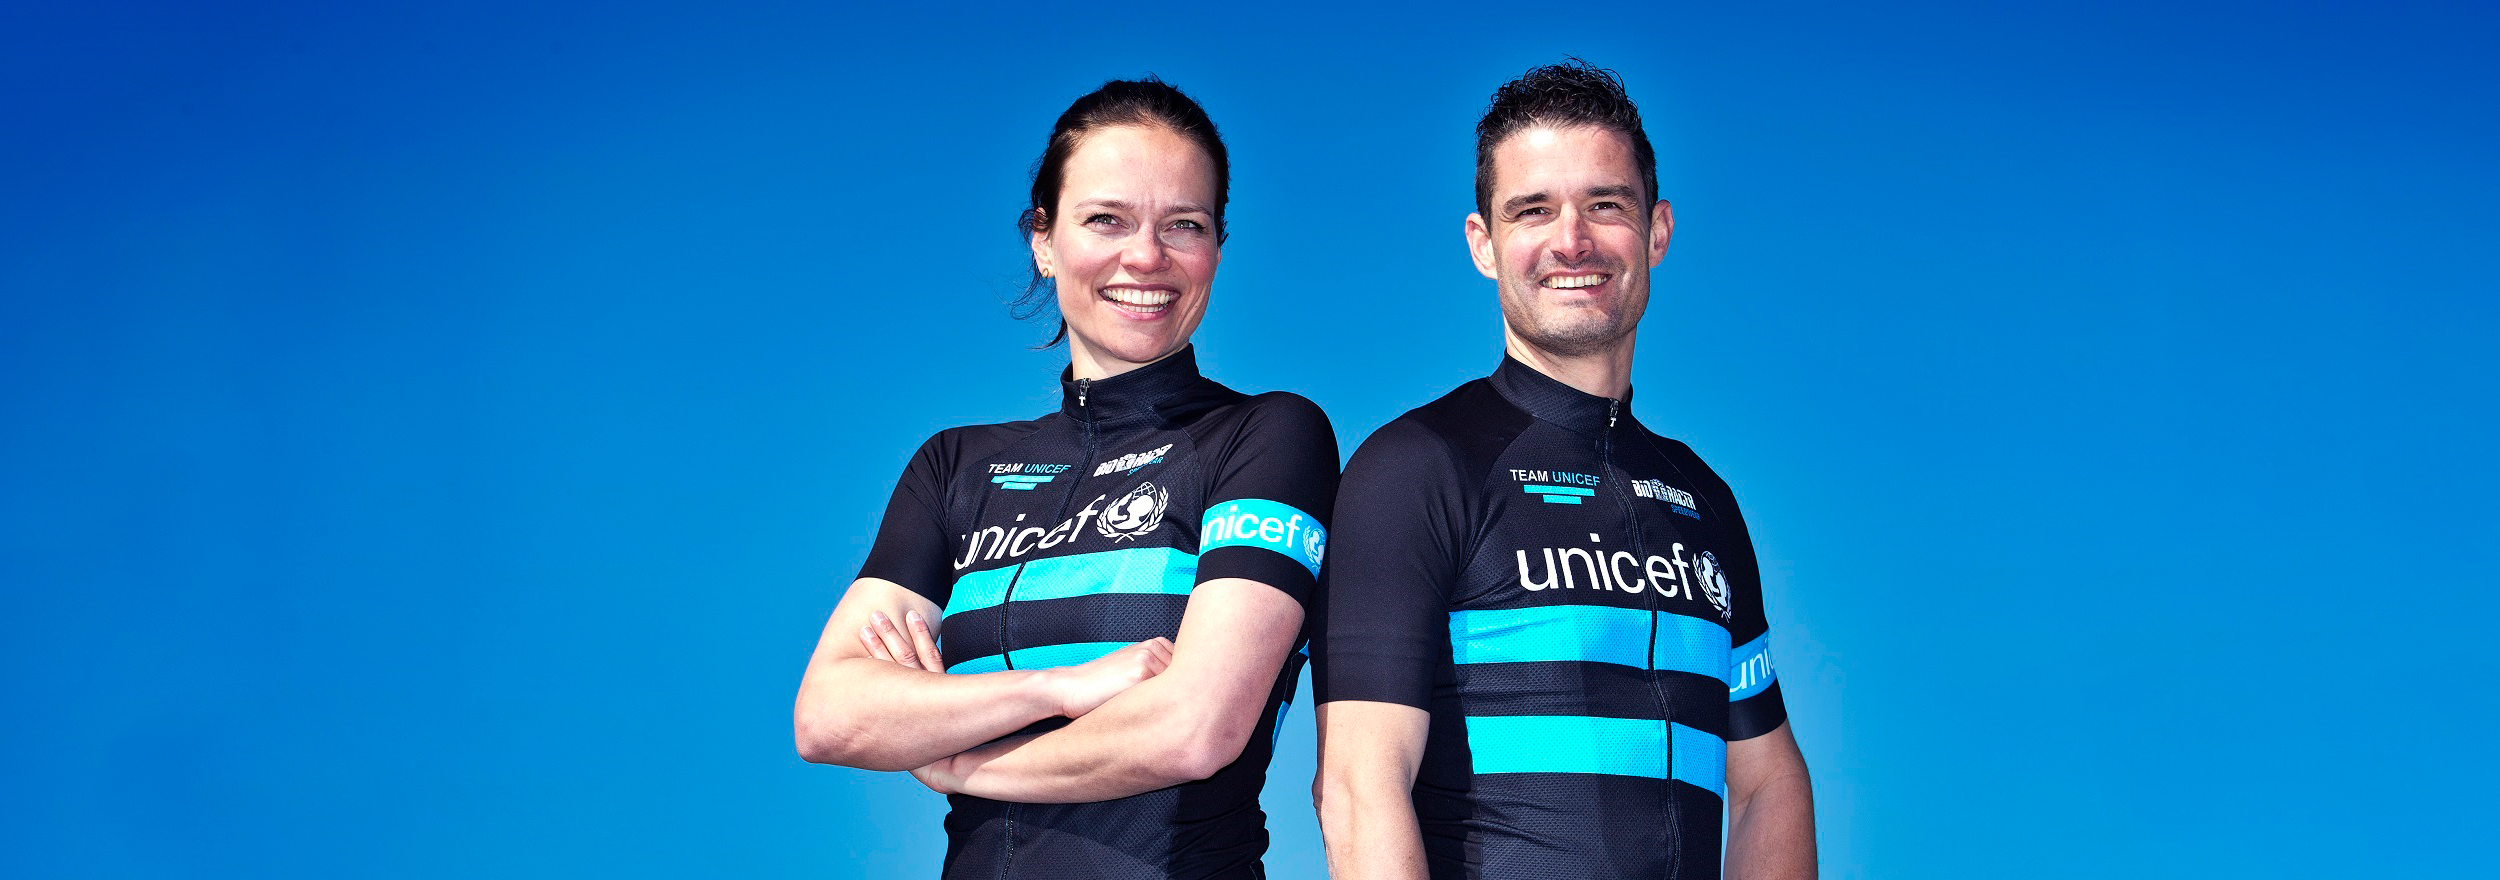 Handvol Incubus aankleden Nieuw: nu ook UNICEF wielerkleding - UNICEF